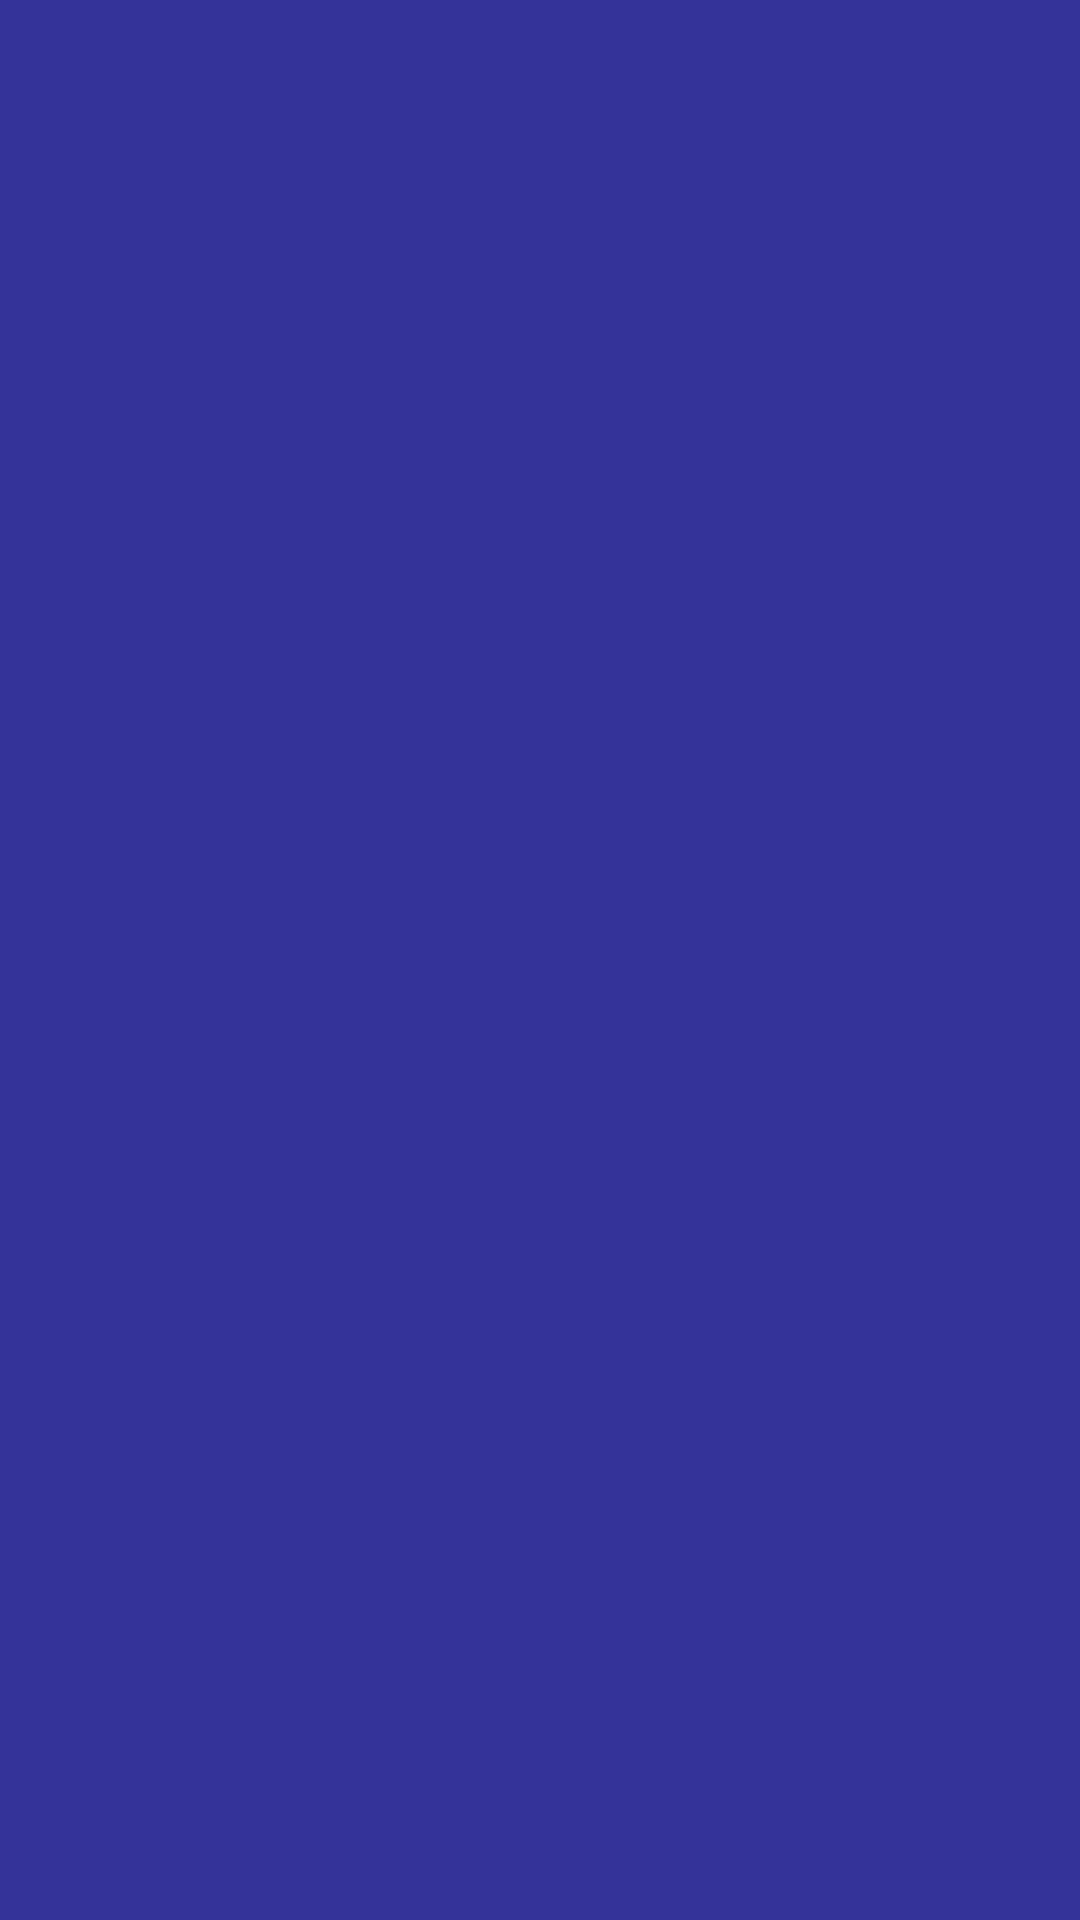 1080x1920 Blue Pigment Solid Color Background